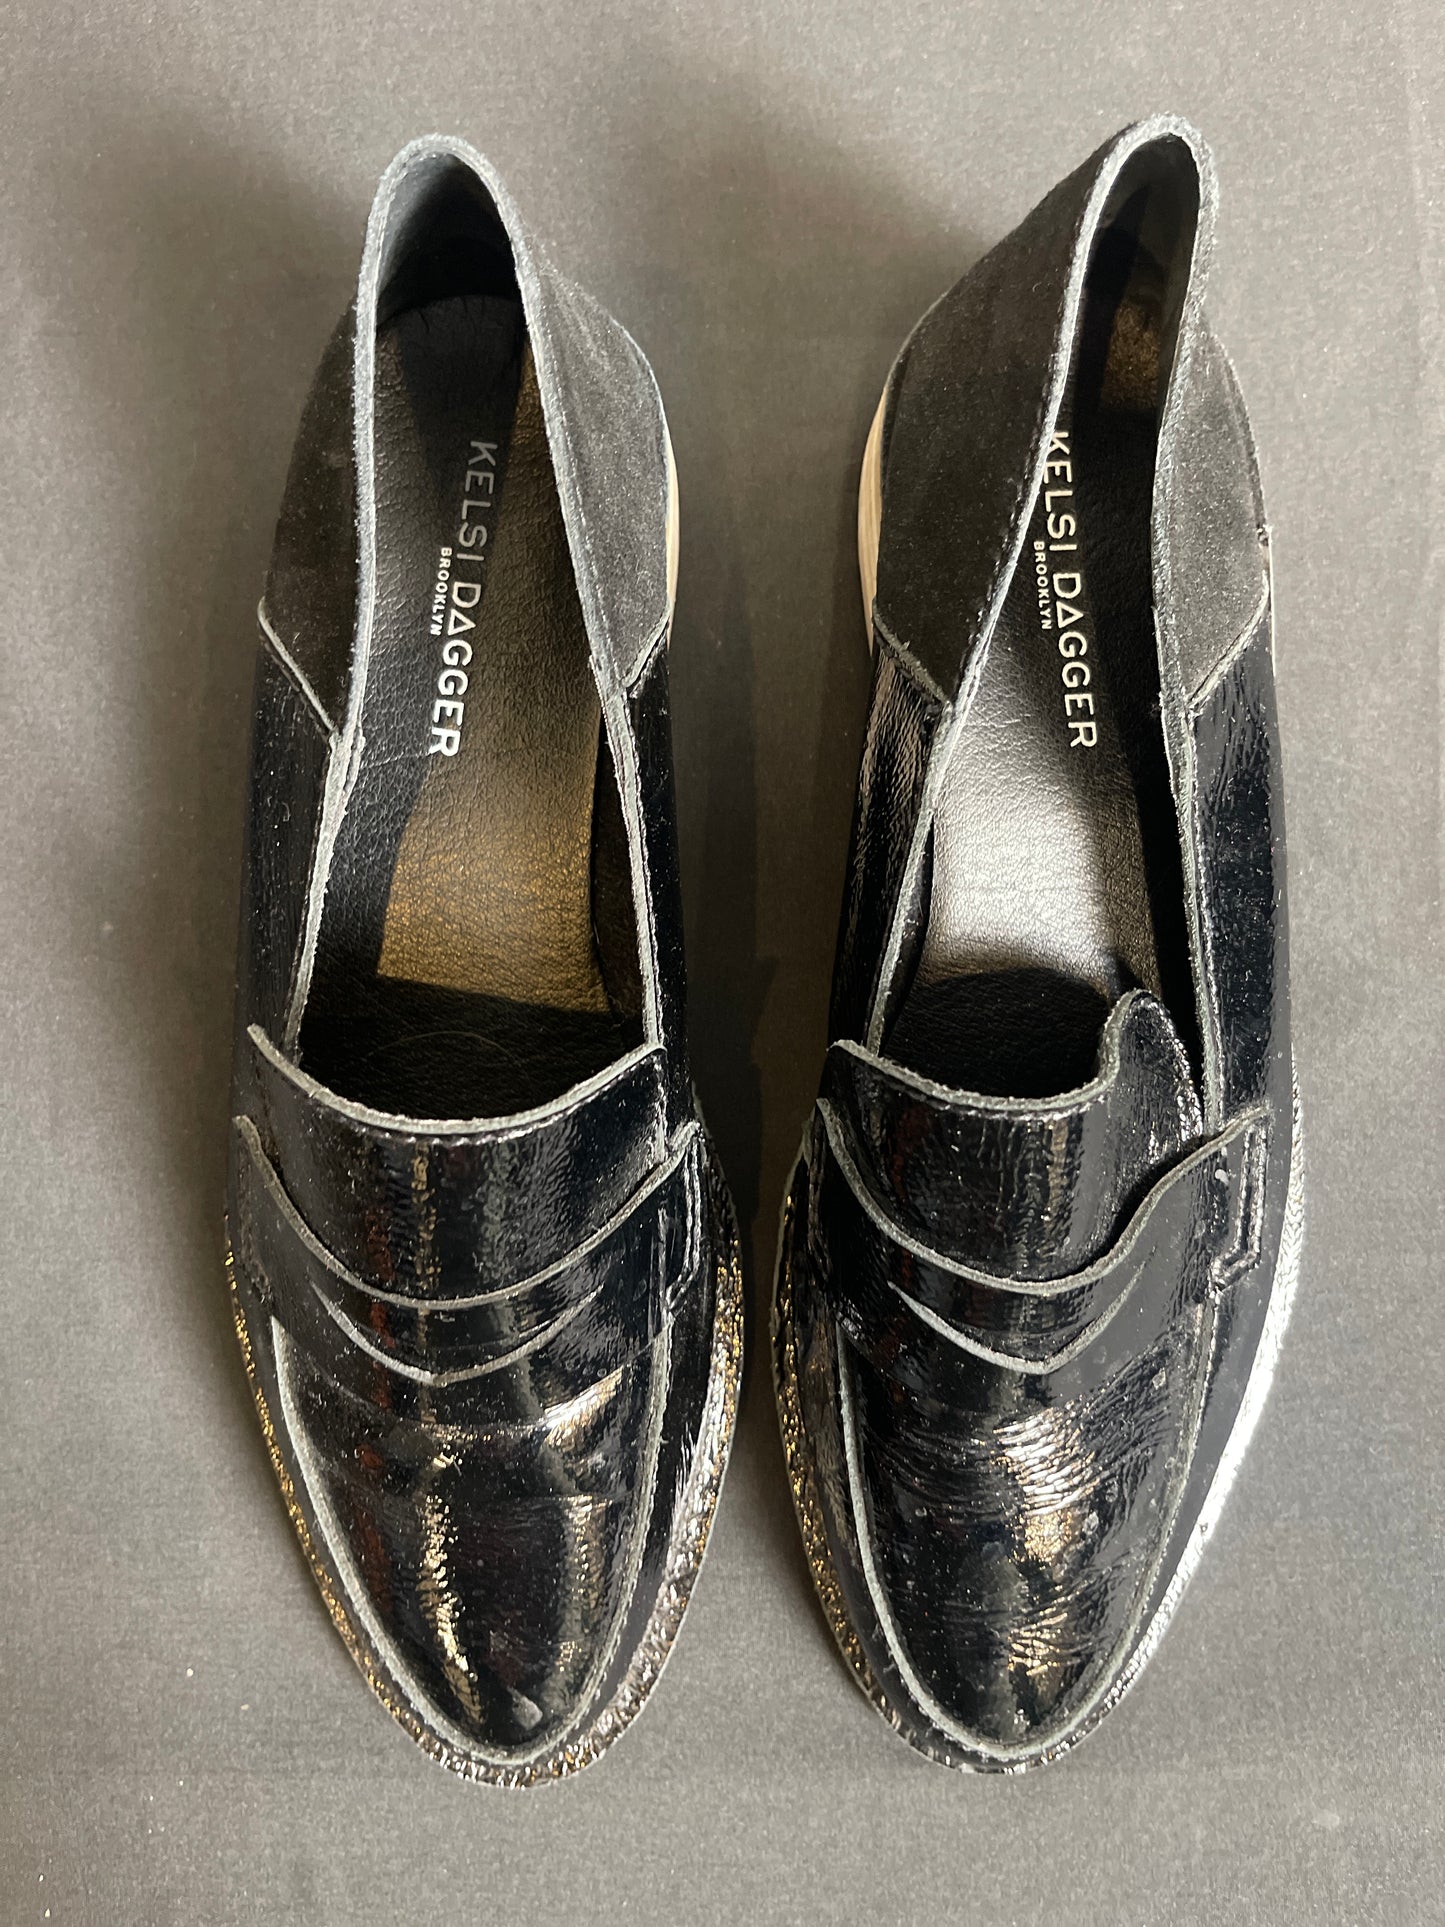 Shoes Heels Stiletto By Antonio Melani  Size: 8.5